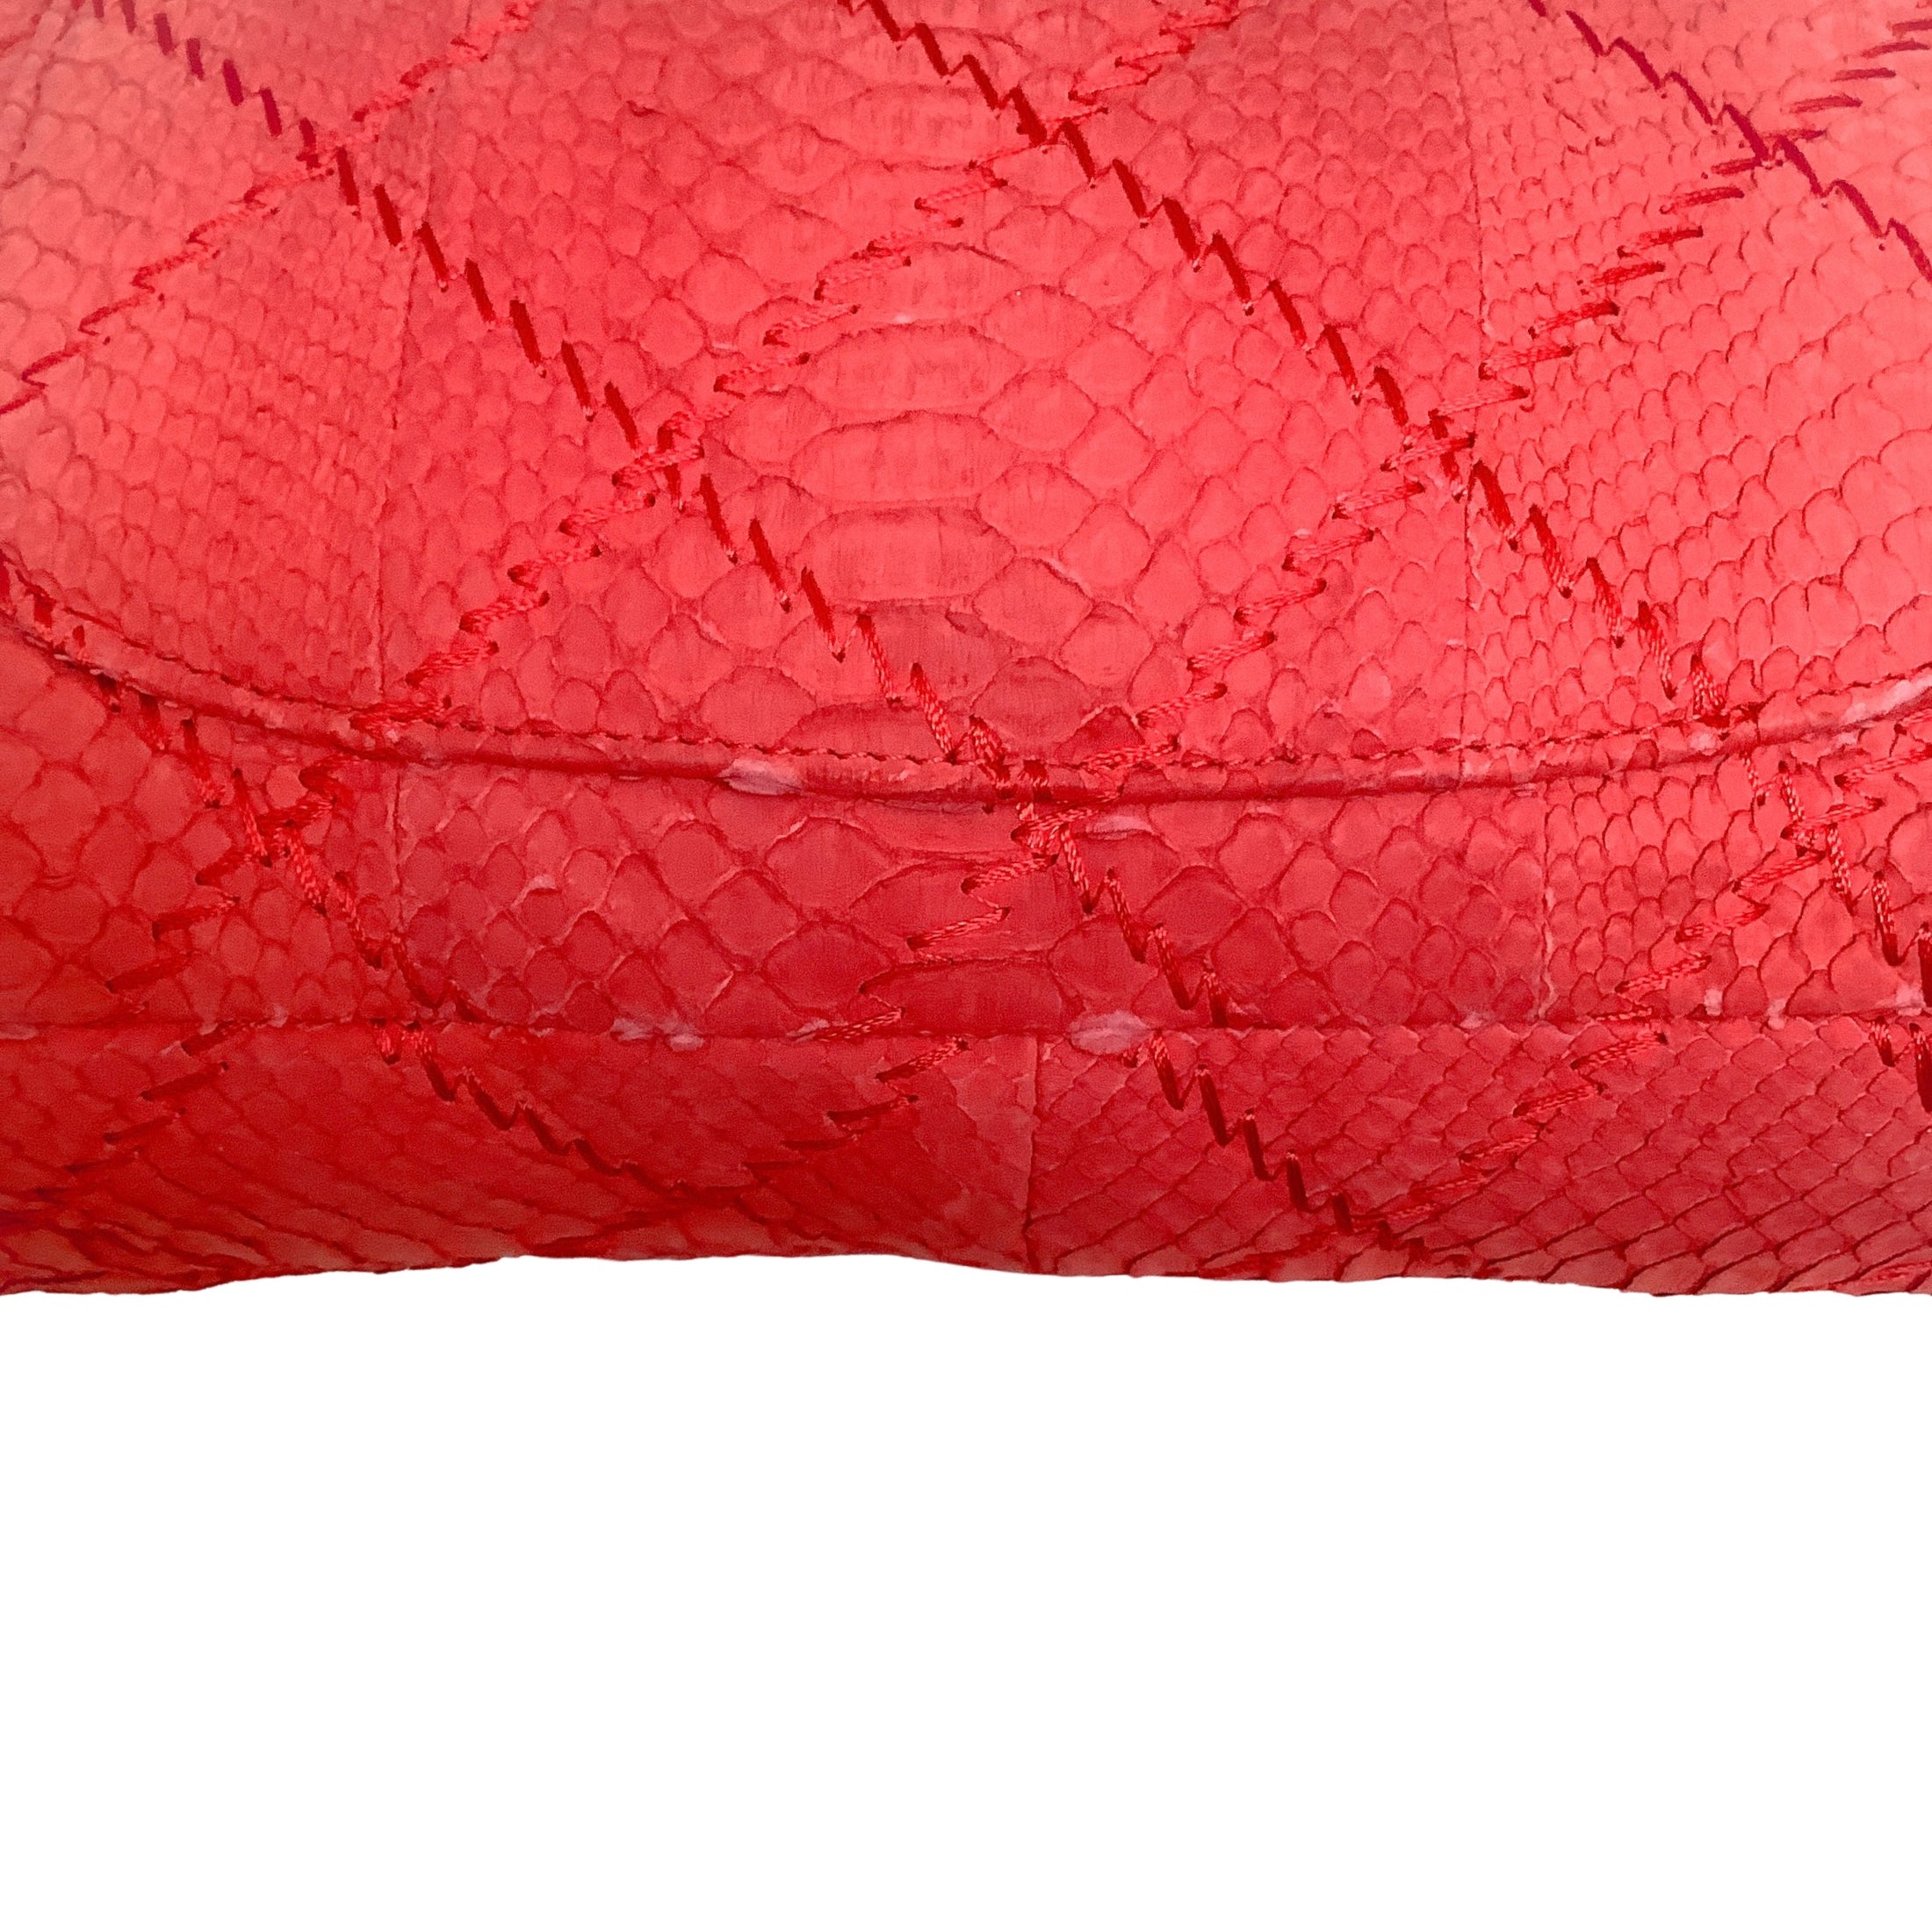 Chanel Coral Python Ultimate Stitch Bag